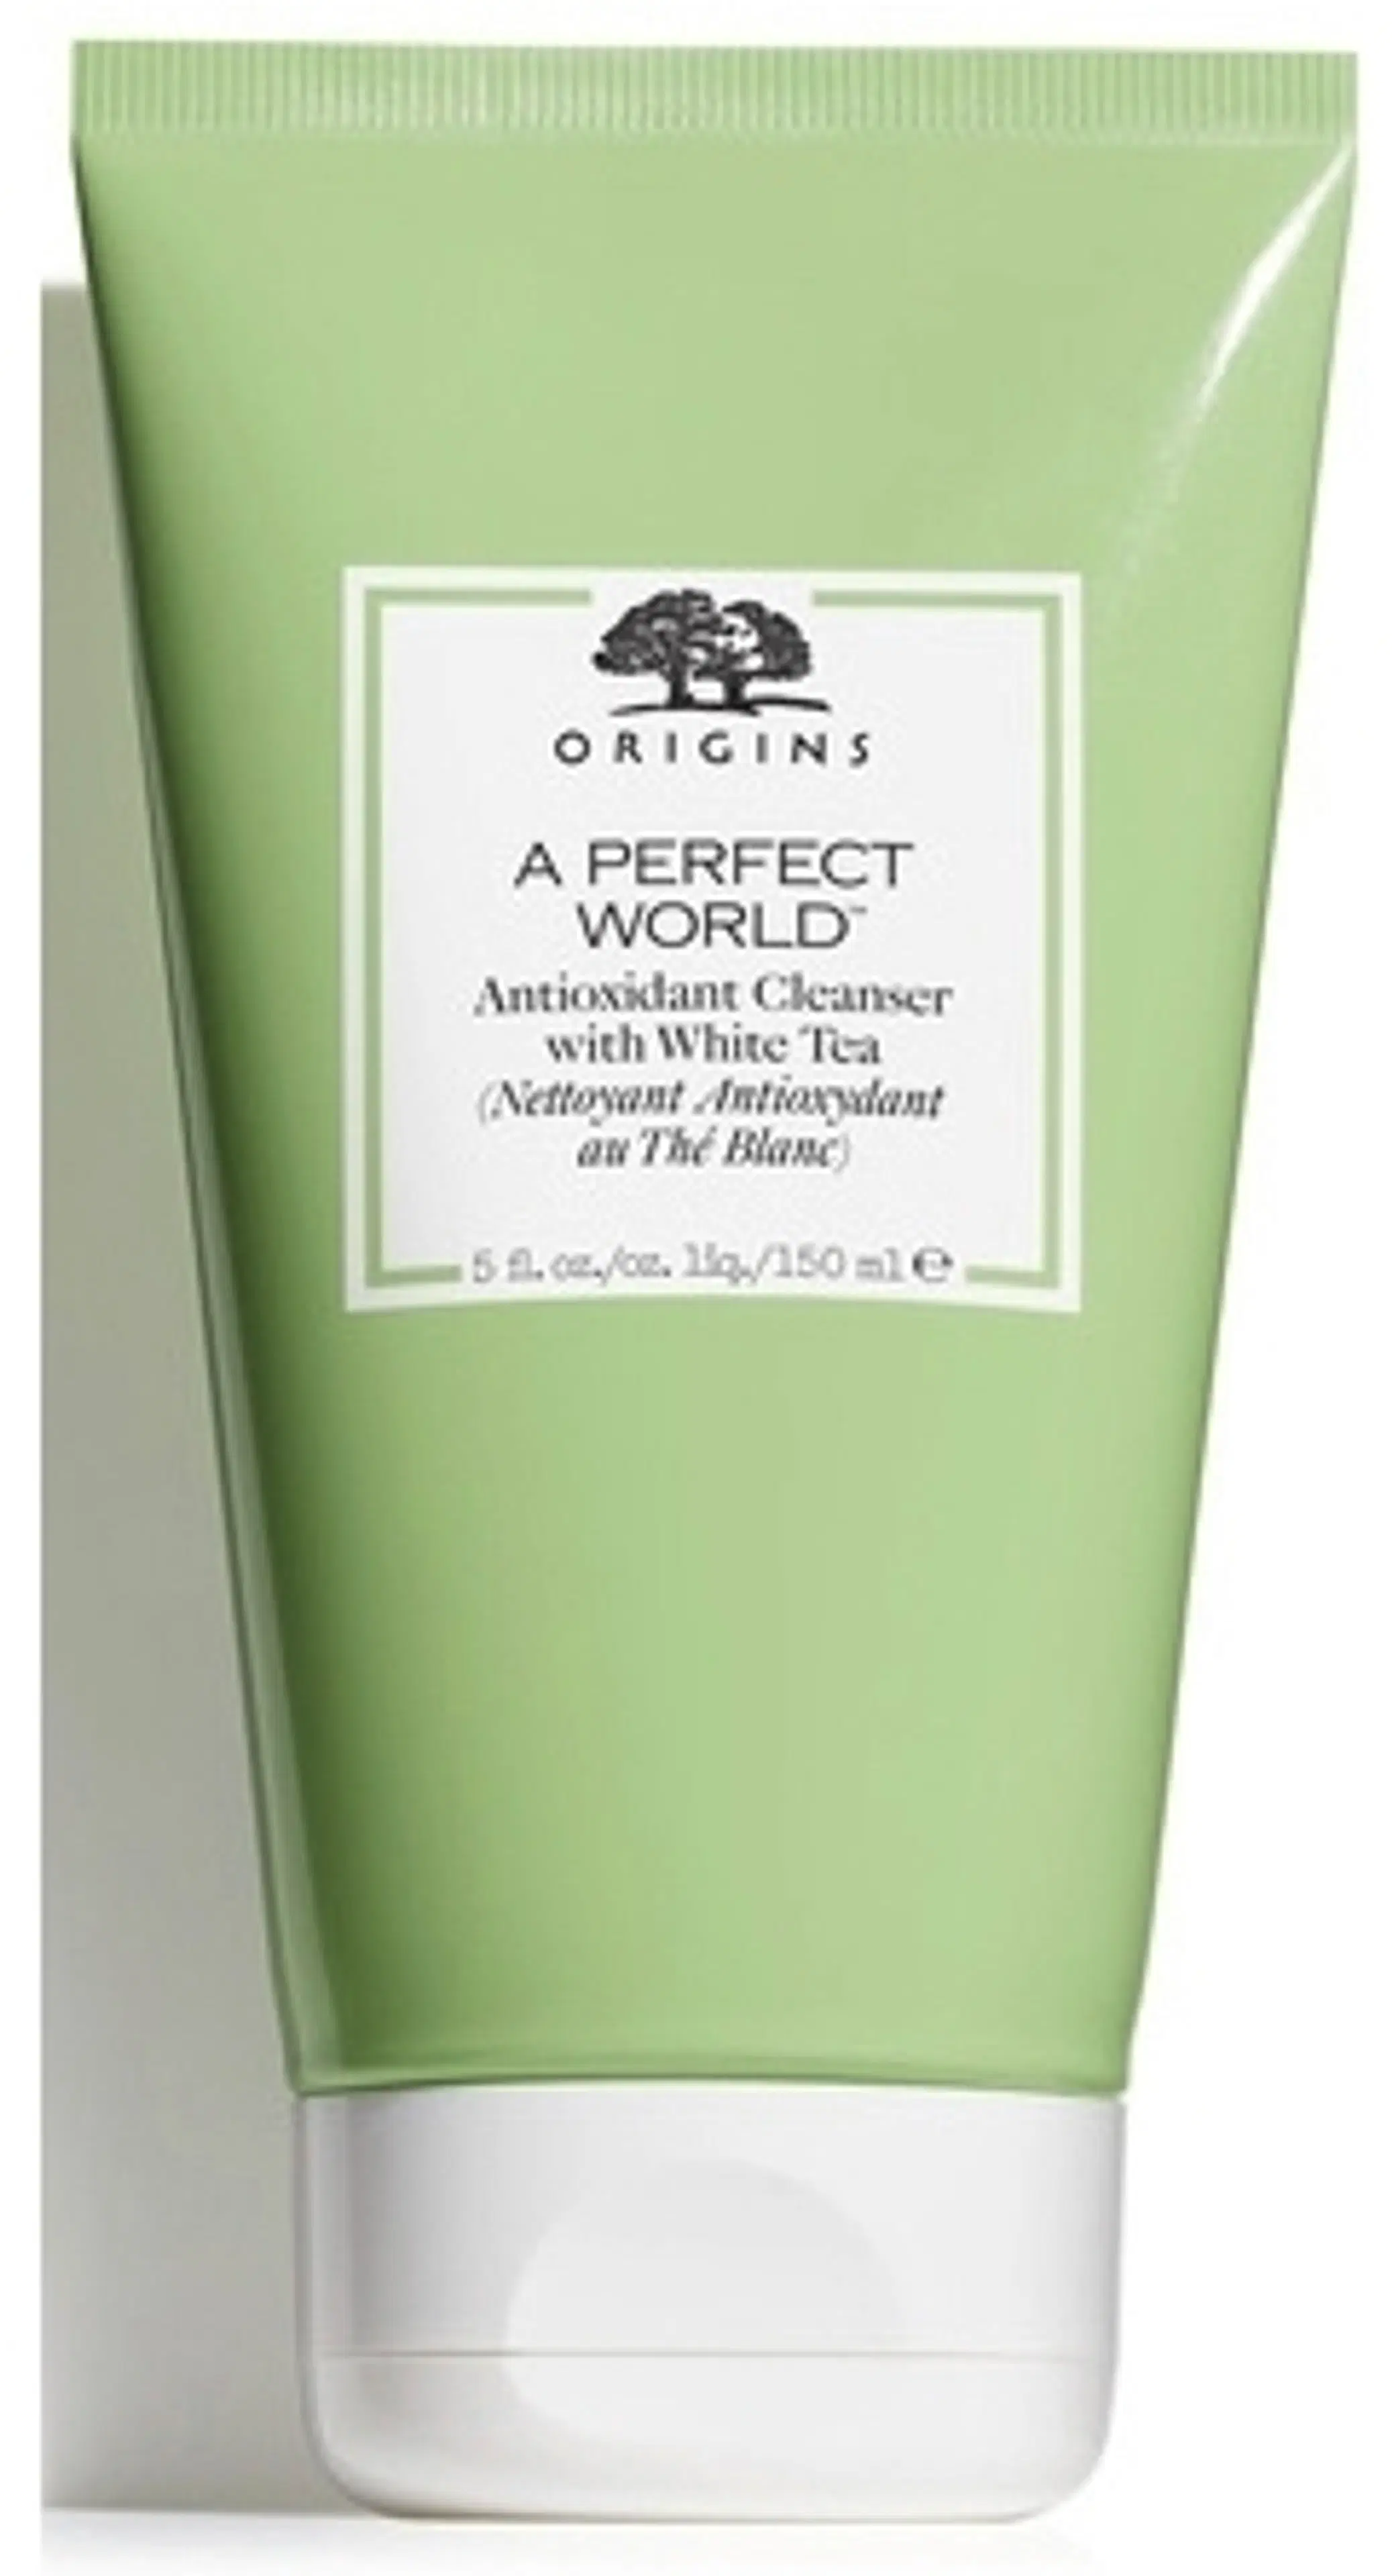 Origins A Perfect World™ Antioxidant Cleanser with White Tea kasvojen puhdistustuote 150ml